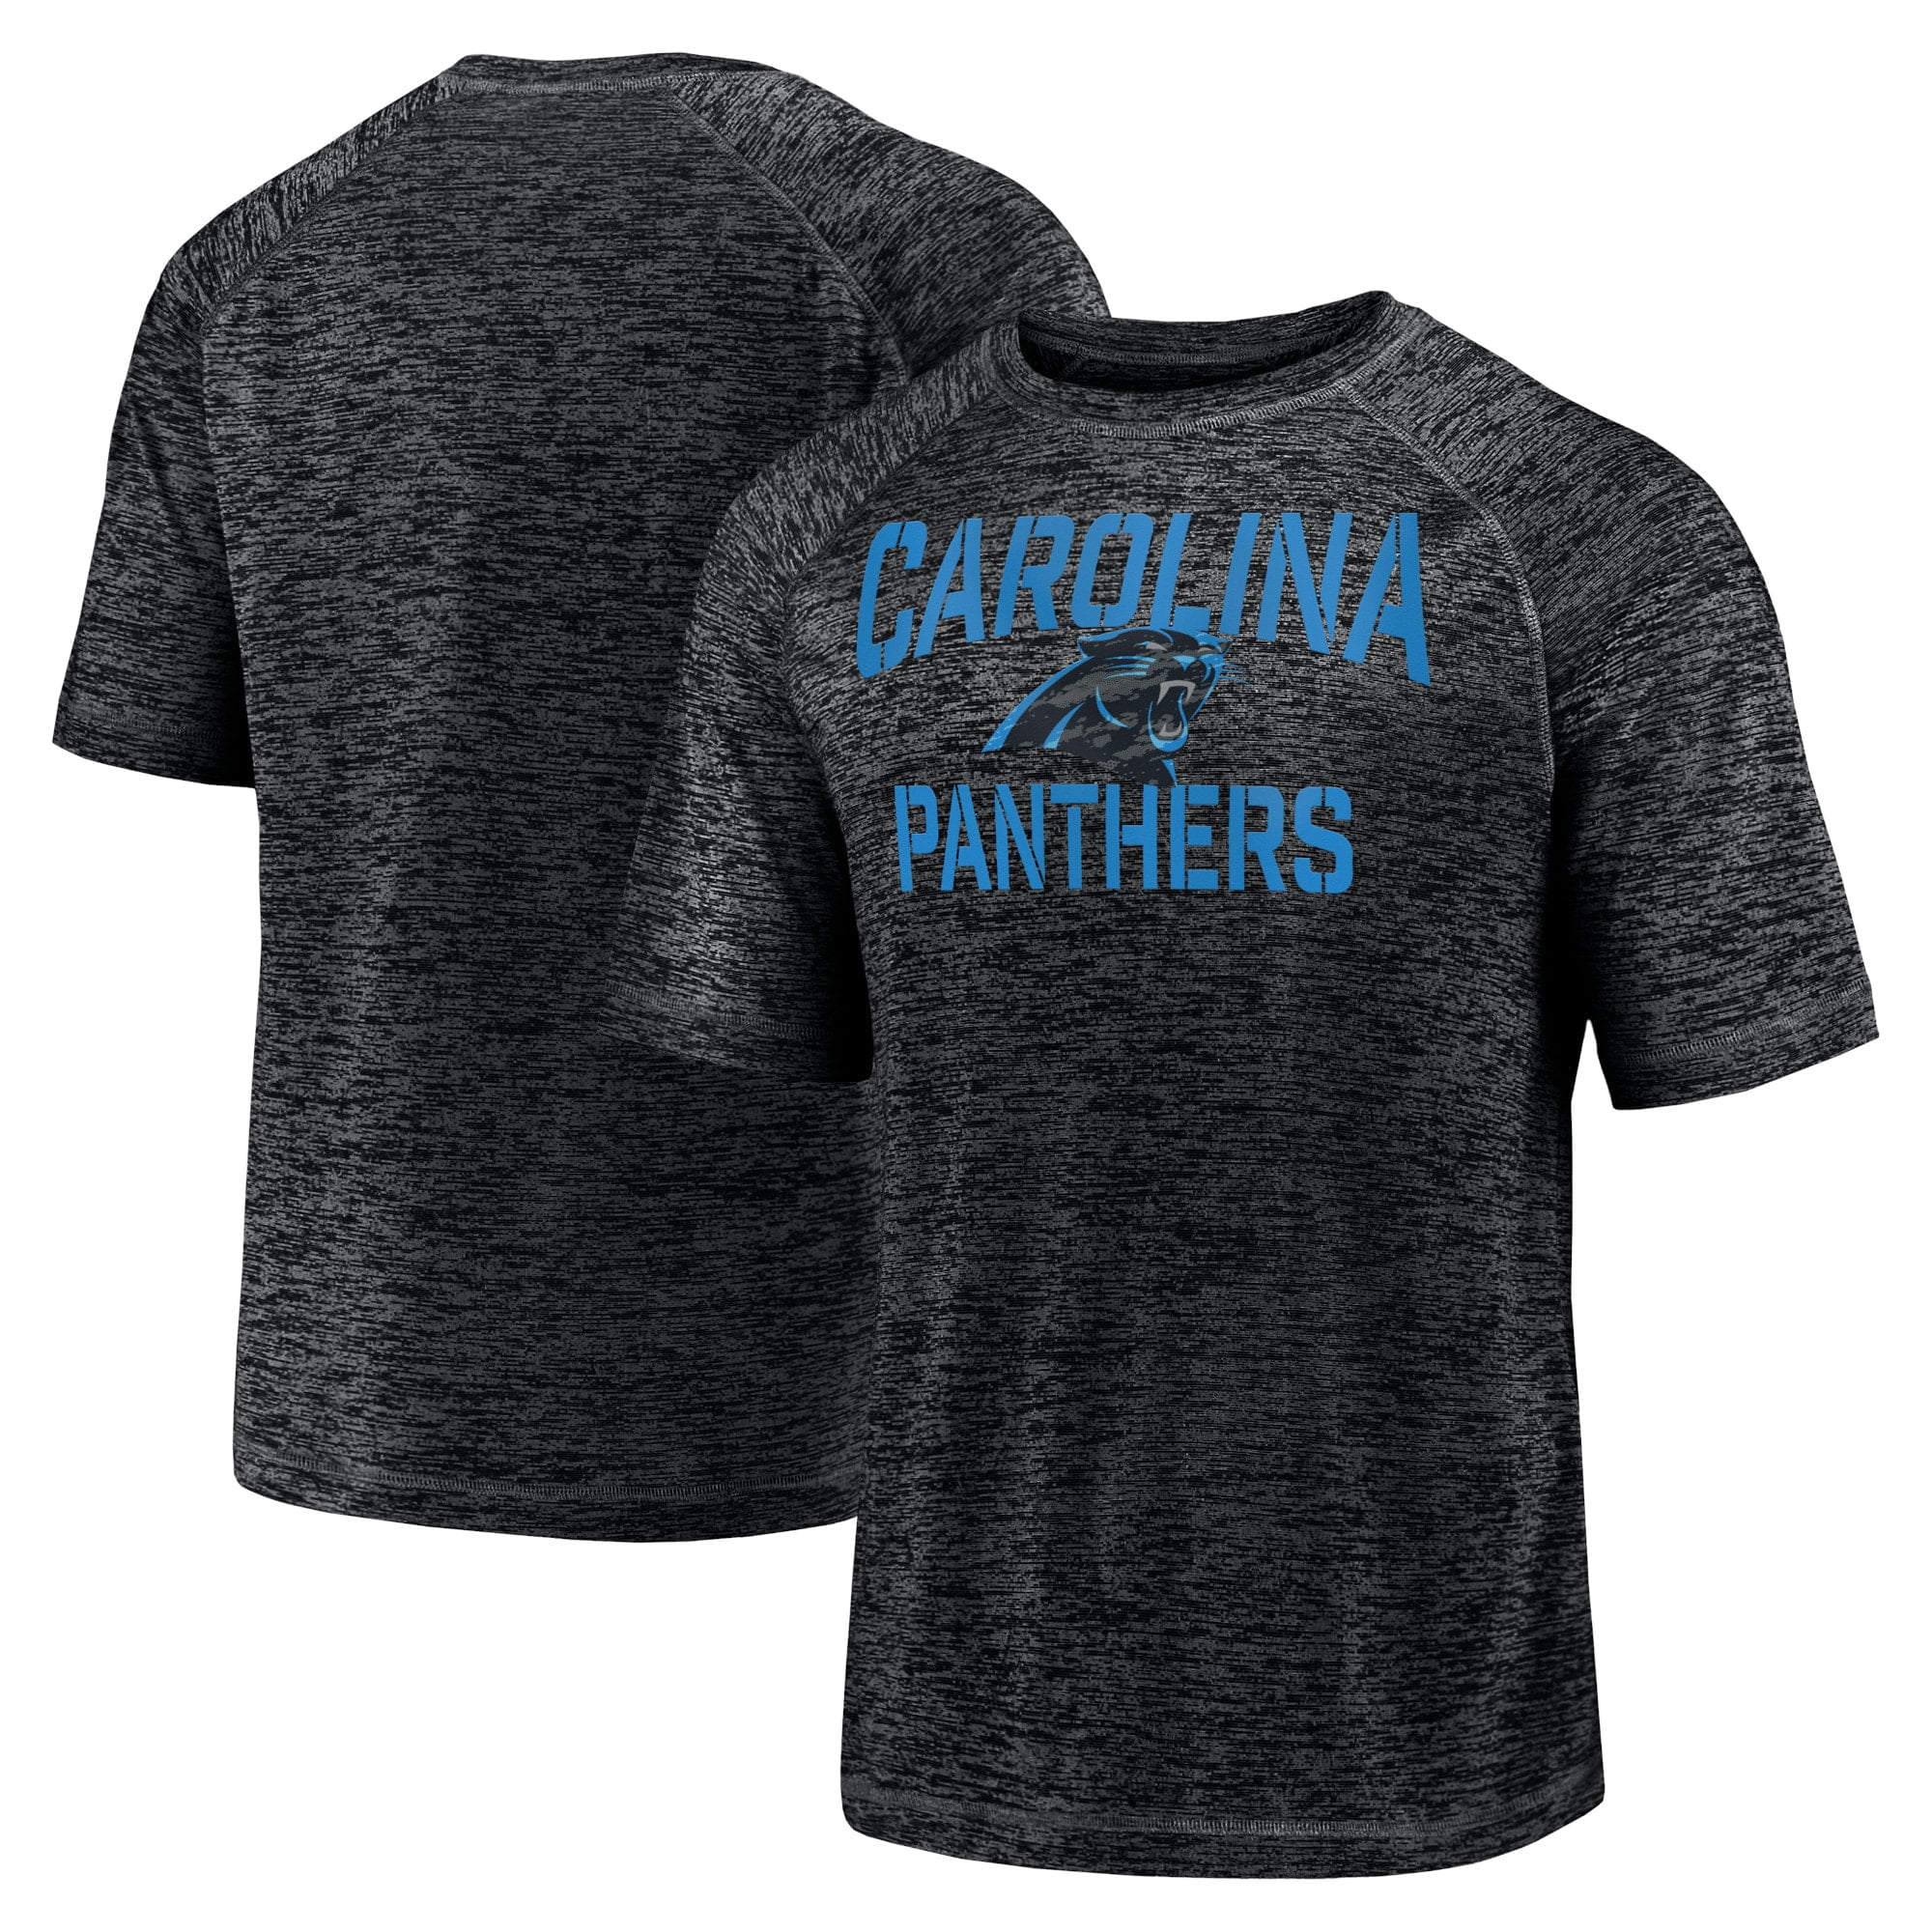 carolina panthers shirts for sale